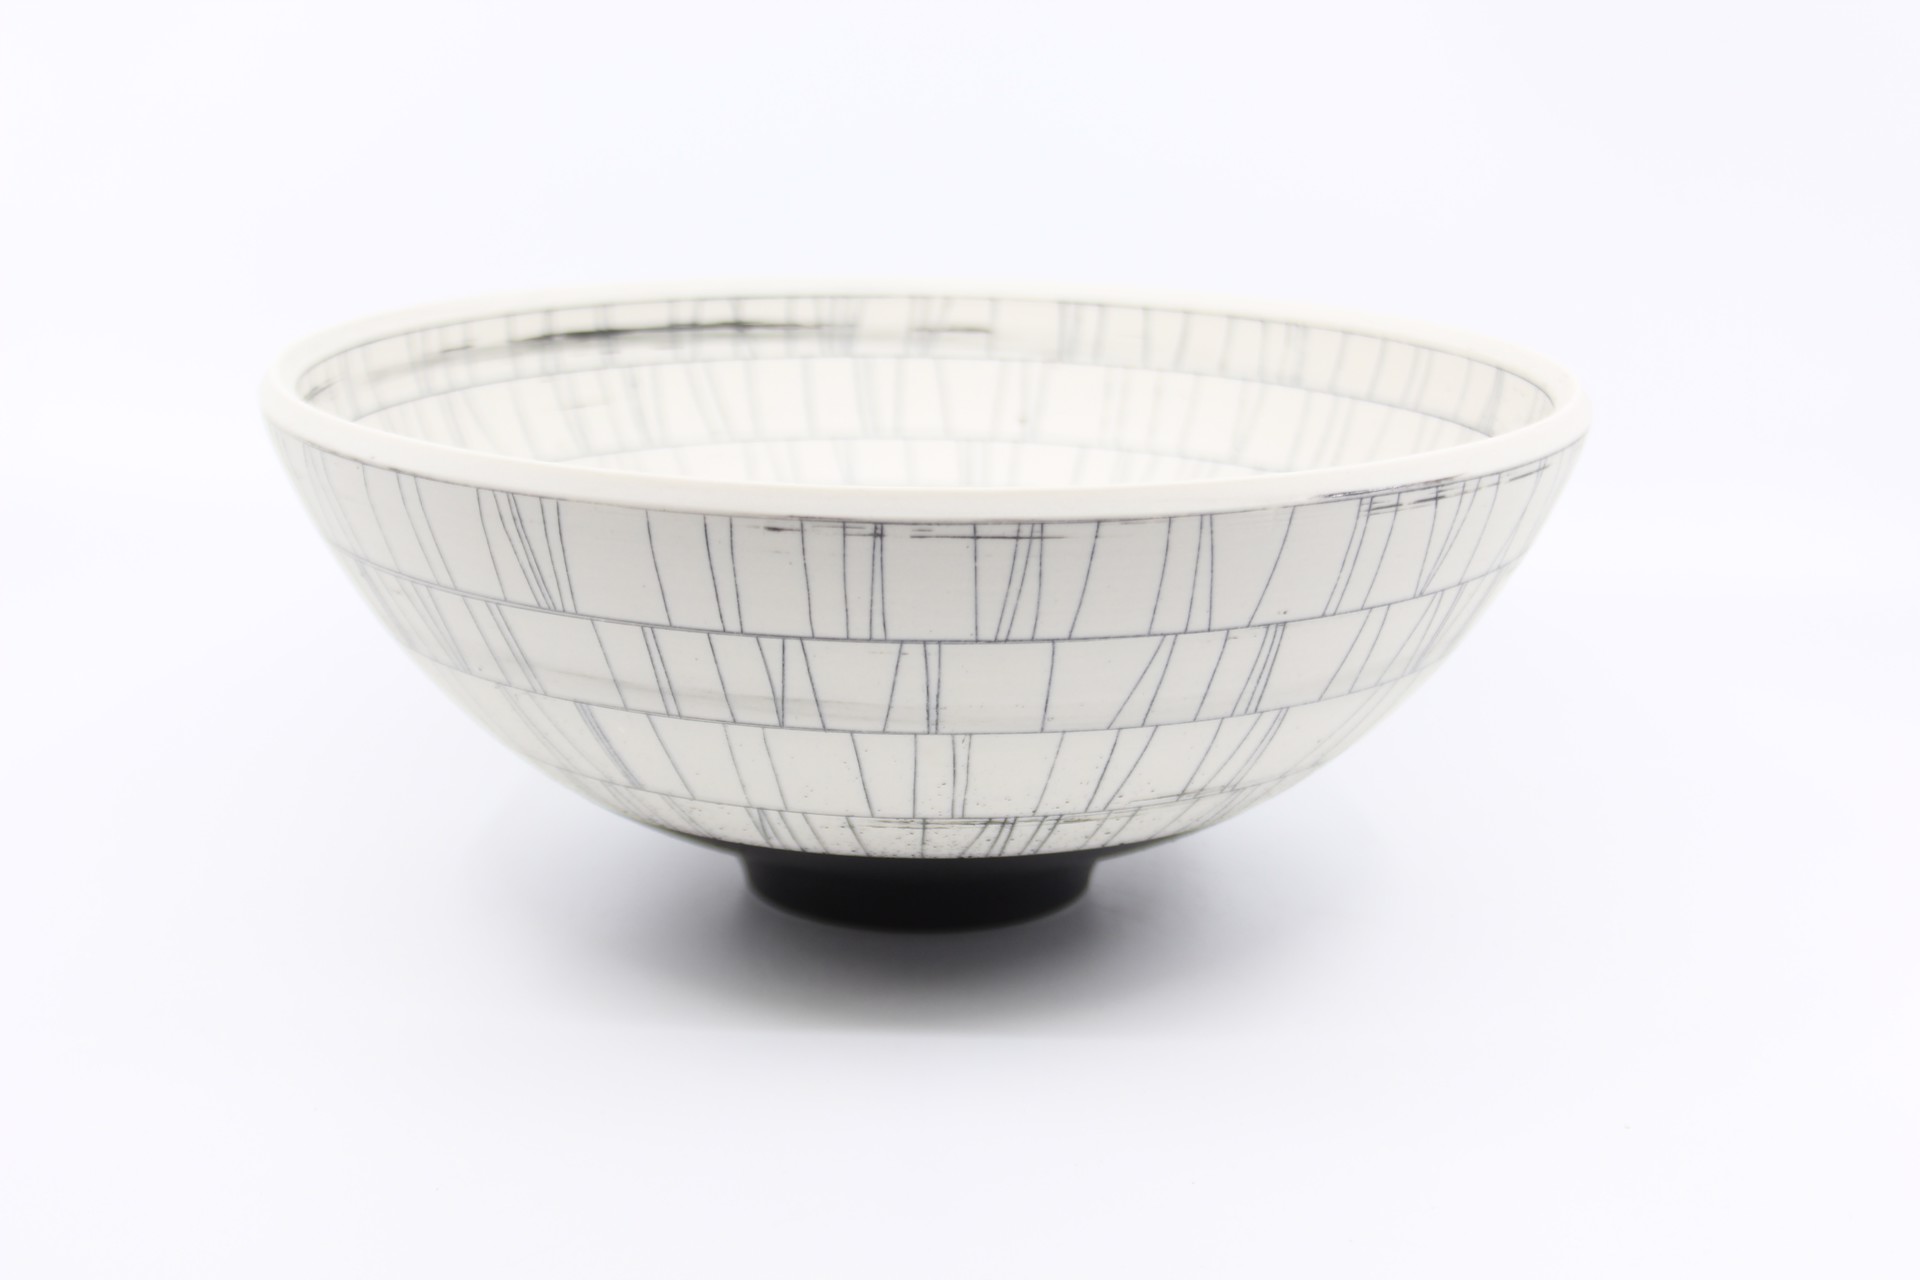 Grid Line Bowl by Bianka Groves